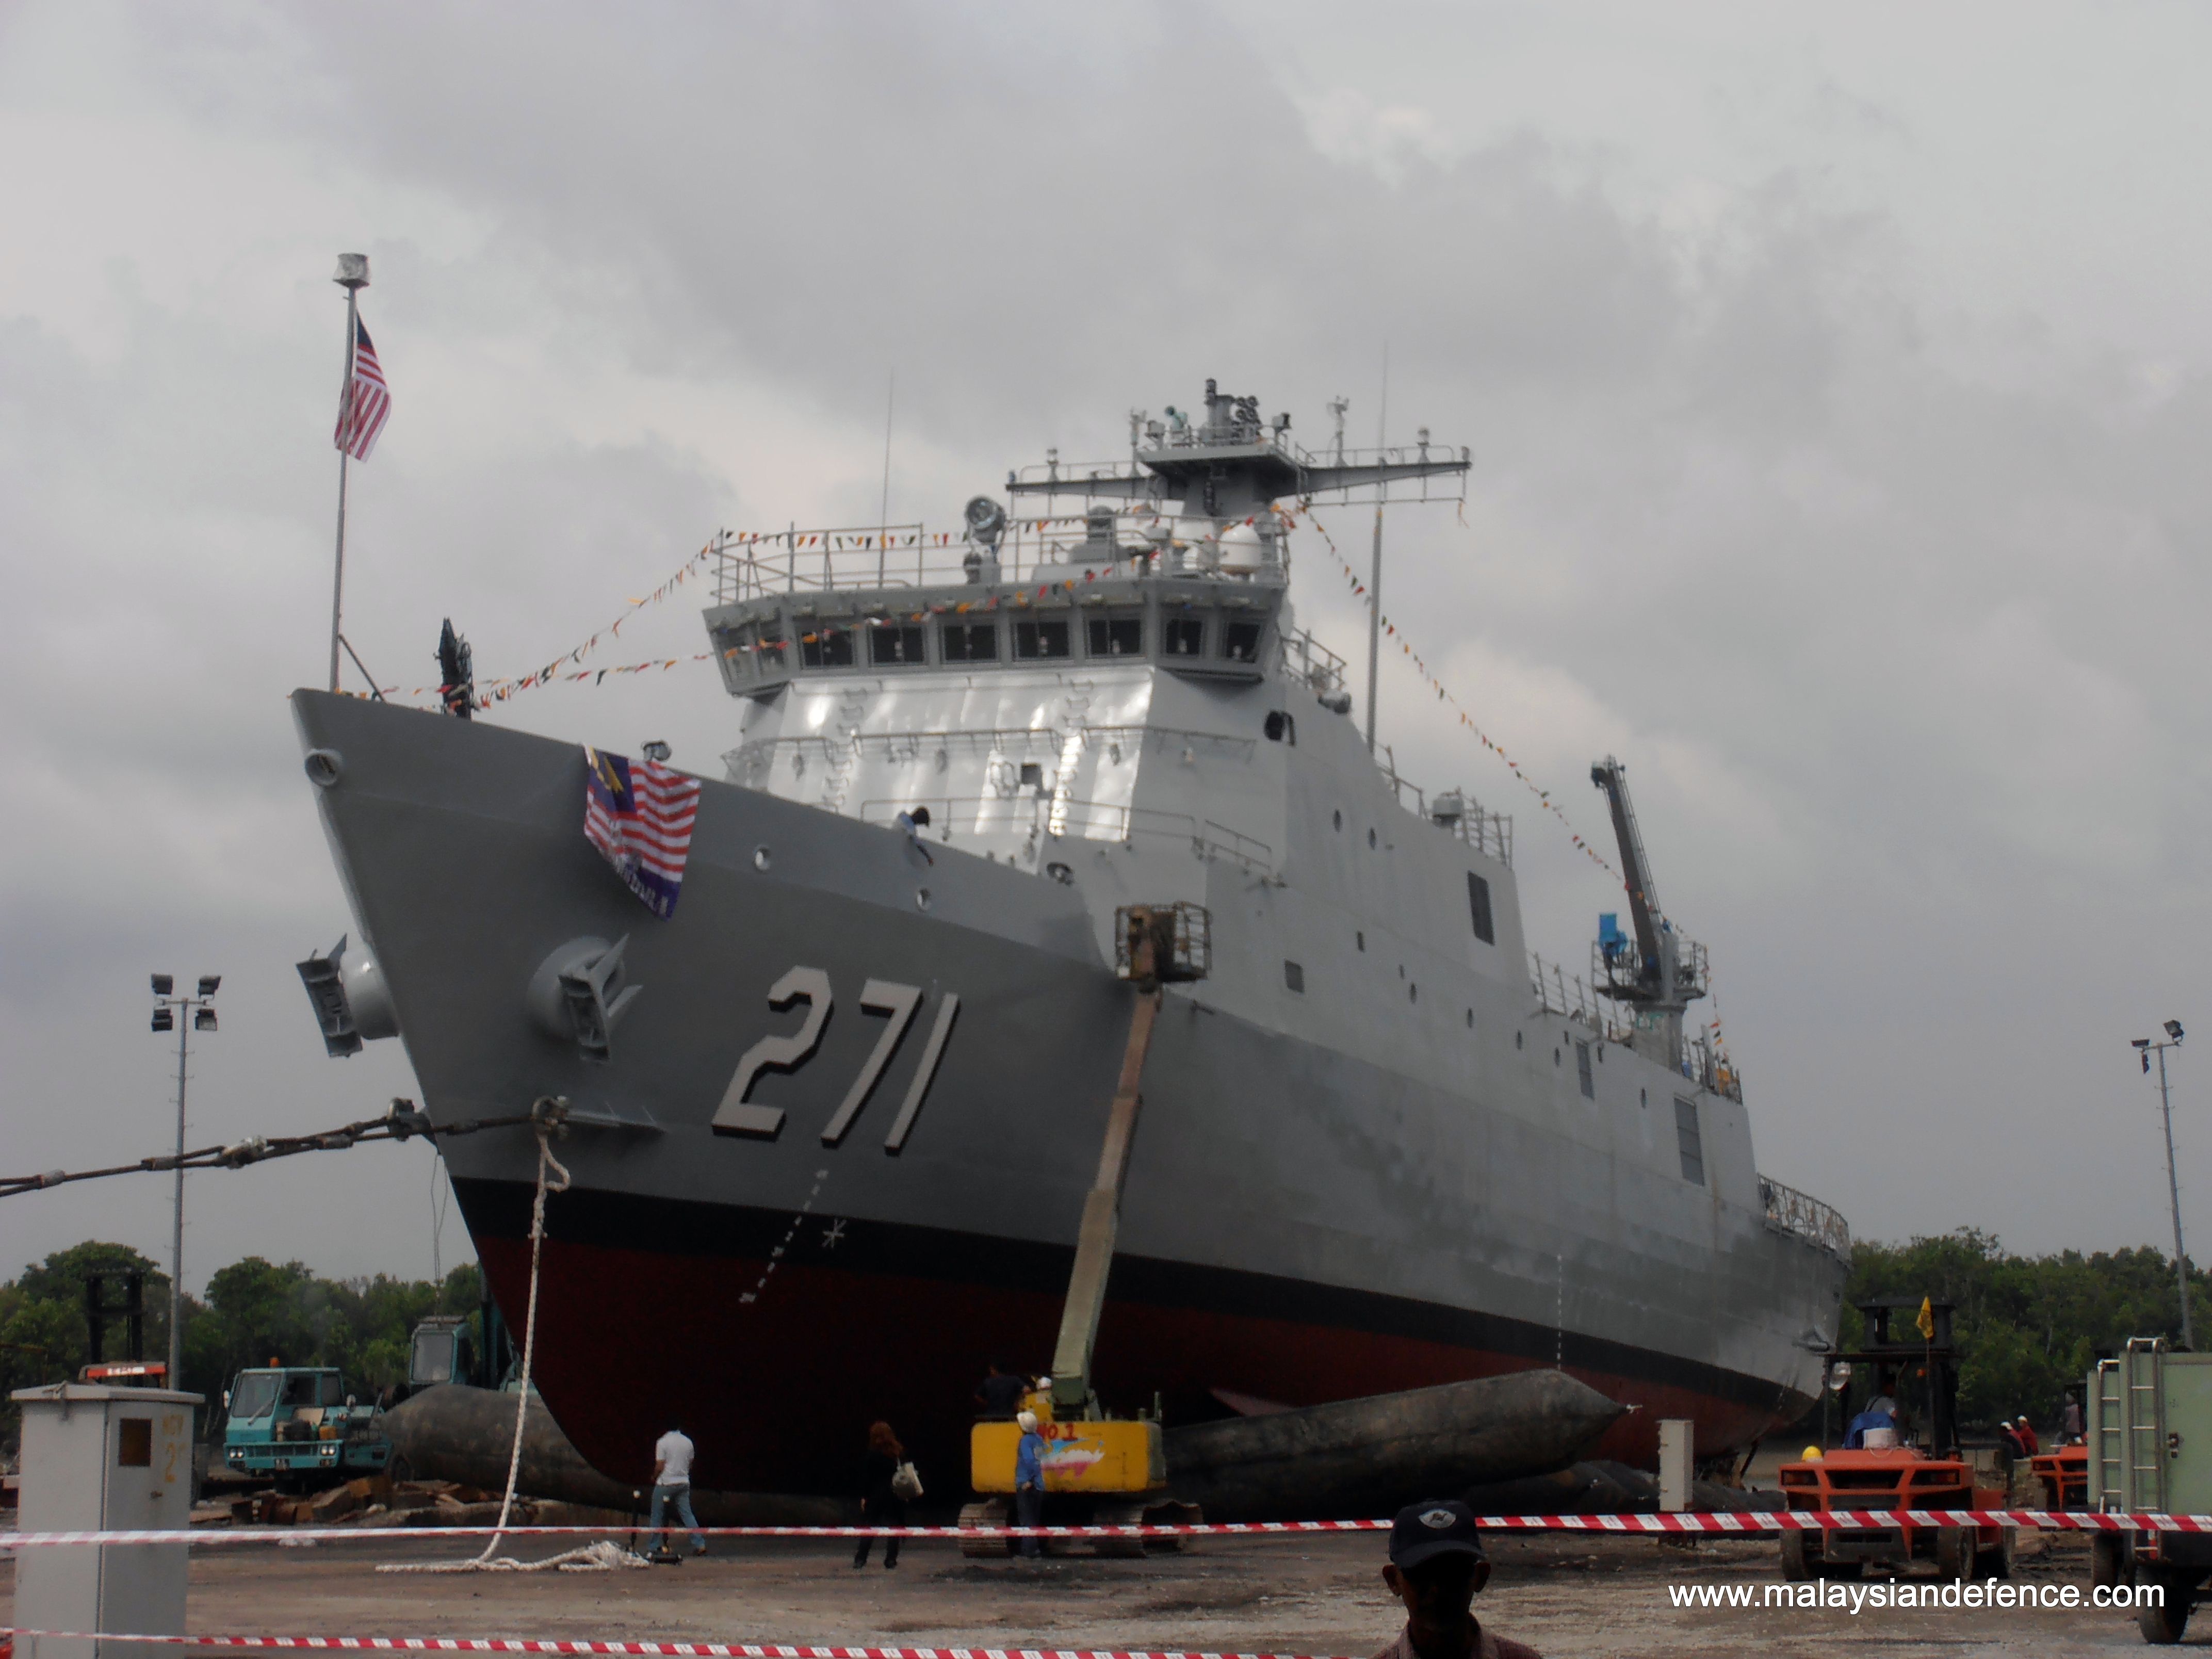 PCU Gagah Samudera - Malaysian Defence